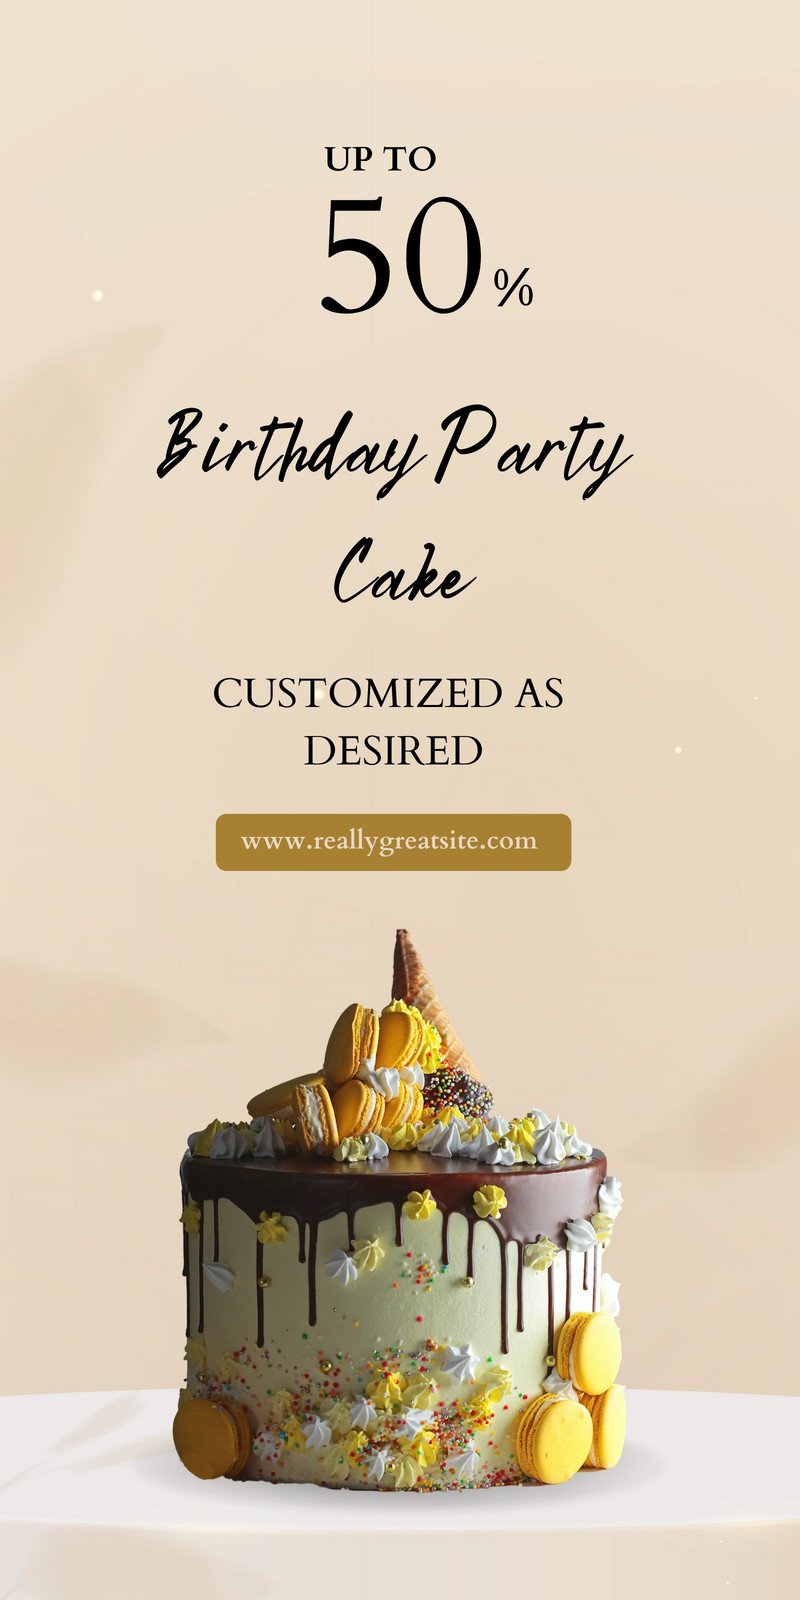 Chocolate cake social media banner post design template | Flickr